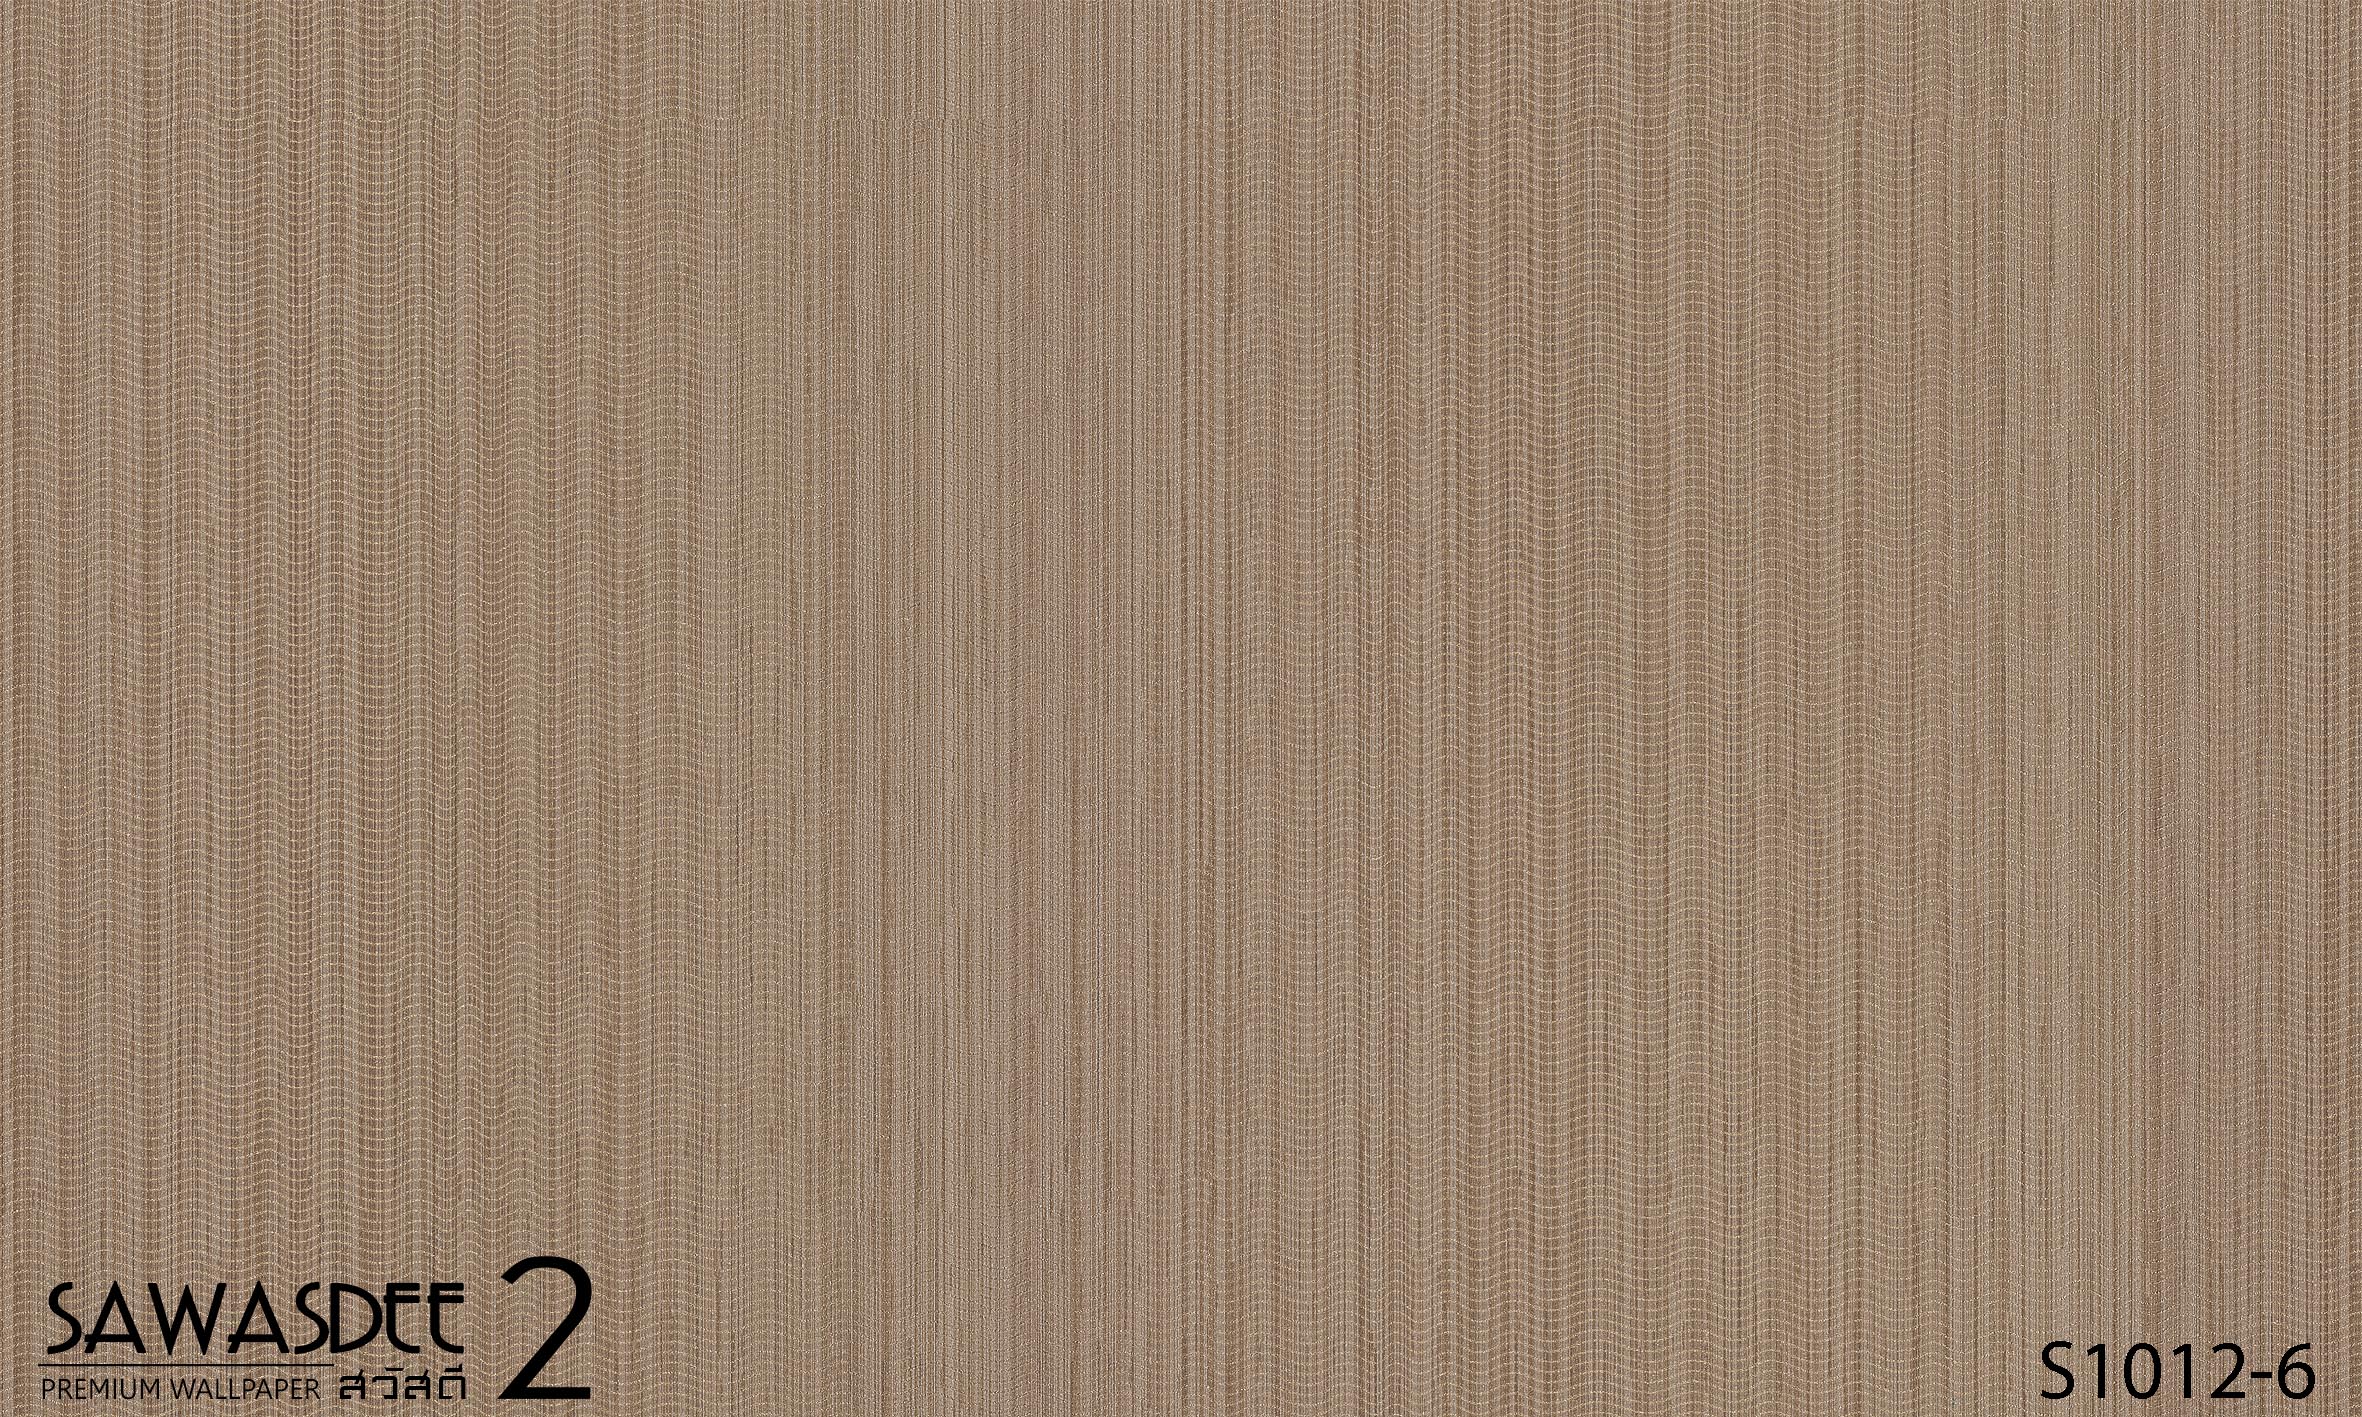 Wallpaper (SAWASDEE 2) S1012-6